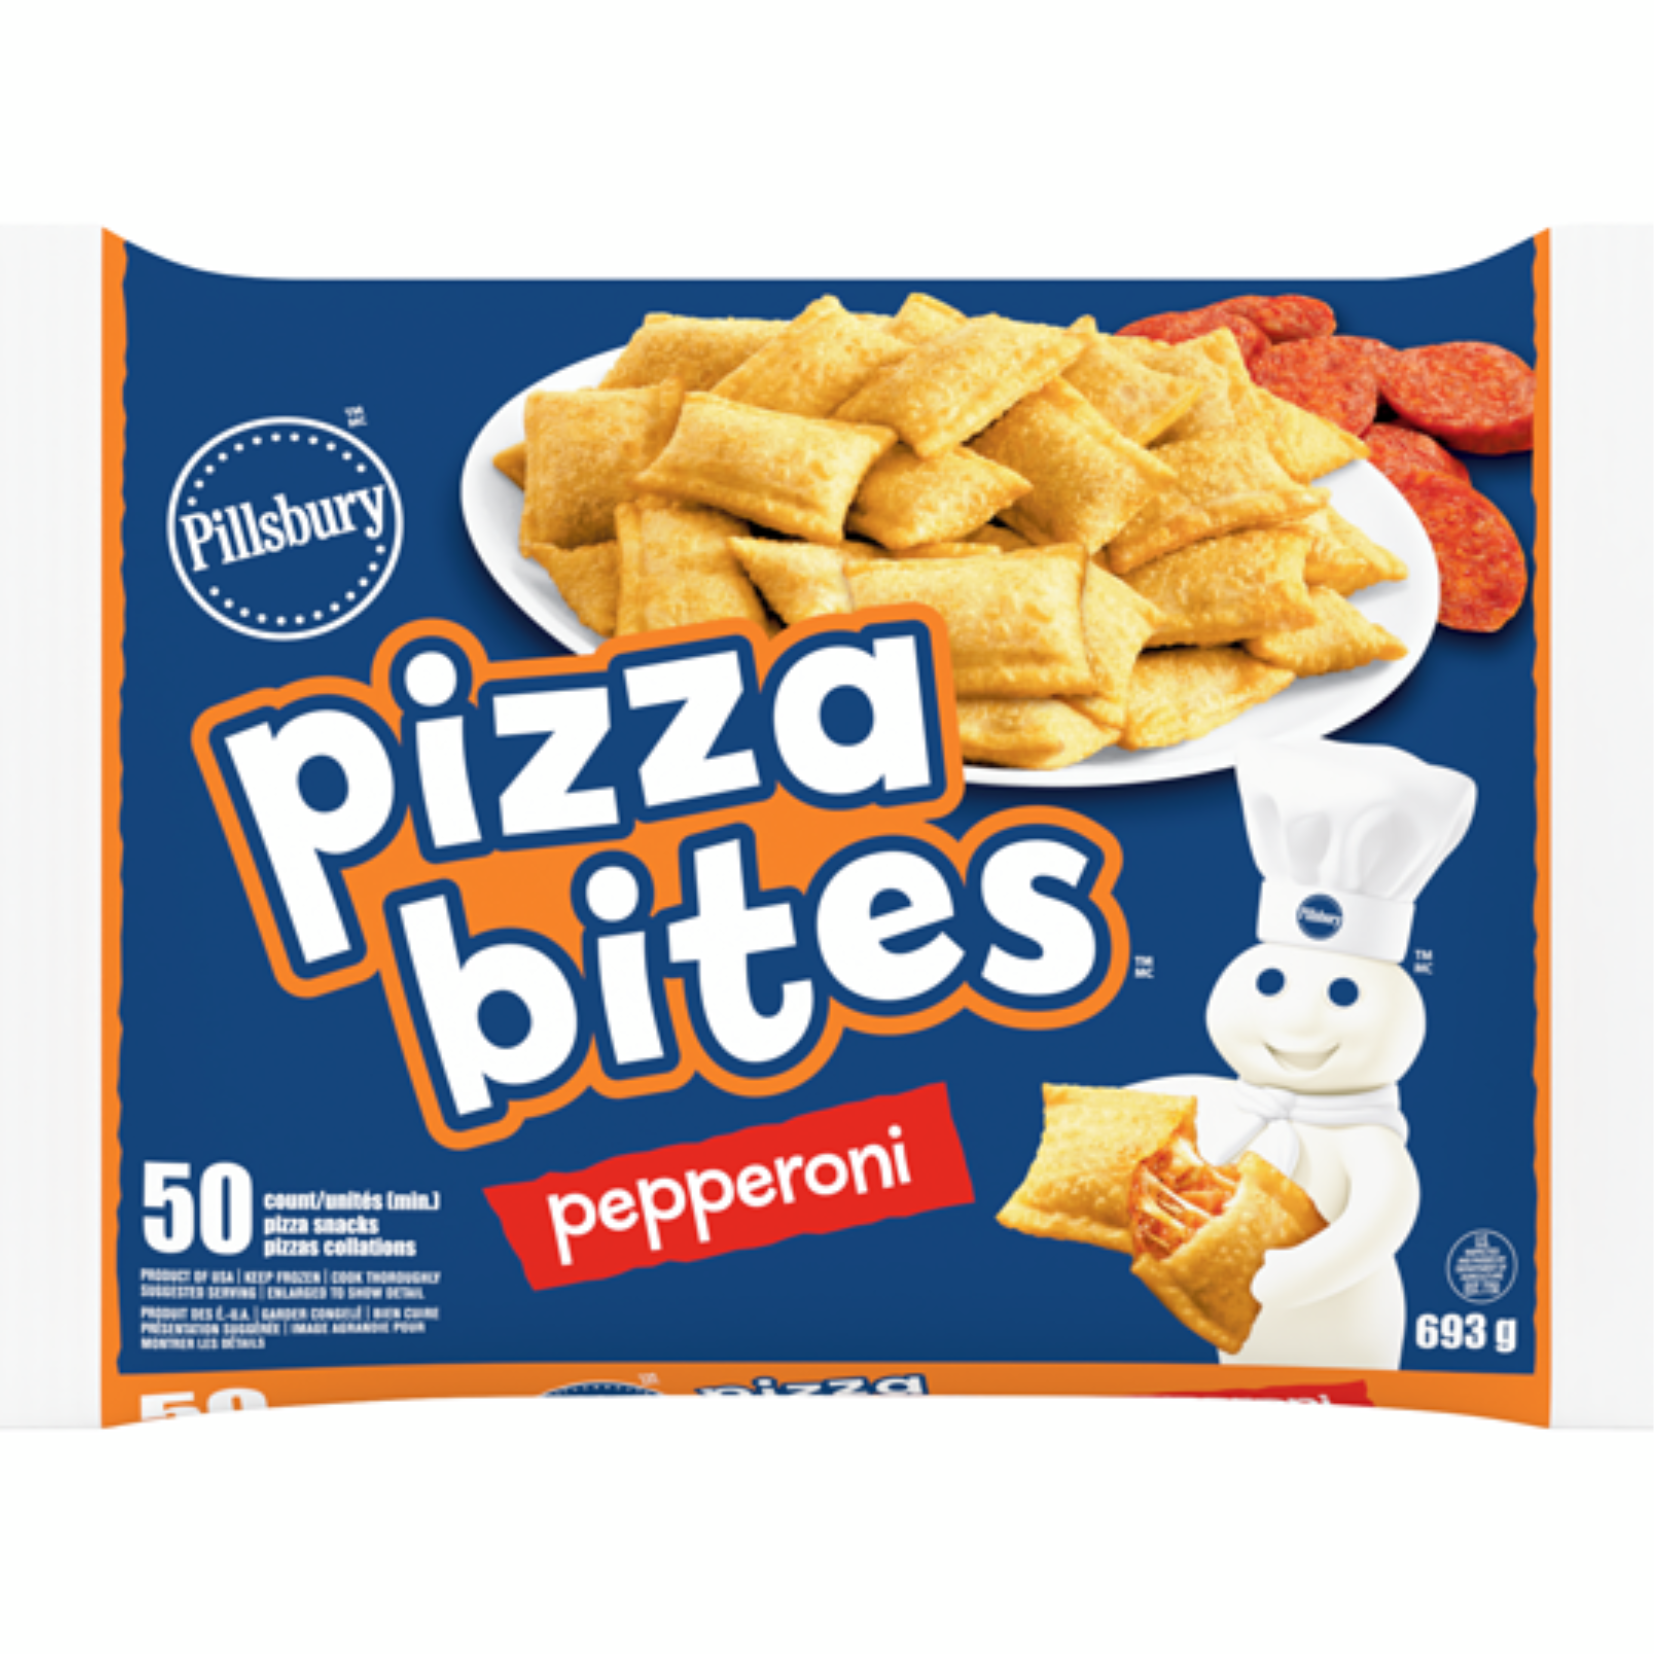 Pillsbury Pepperoni Pizza Bites 693g